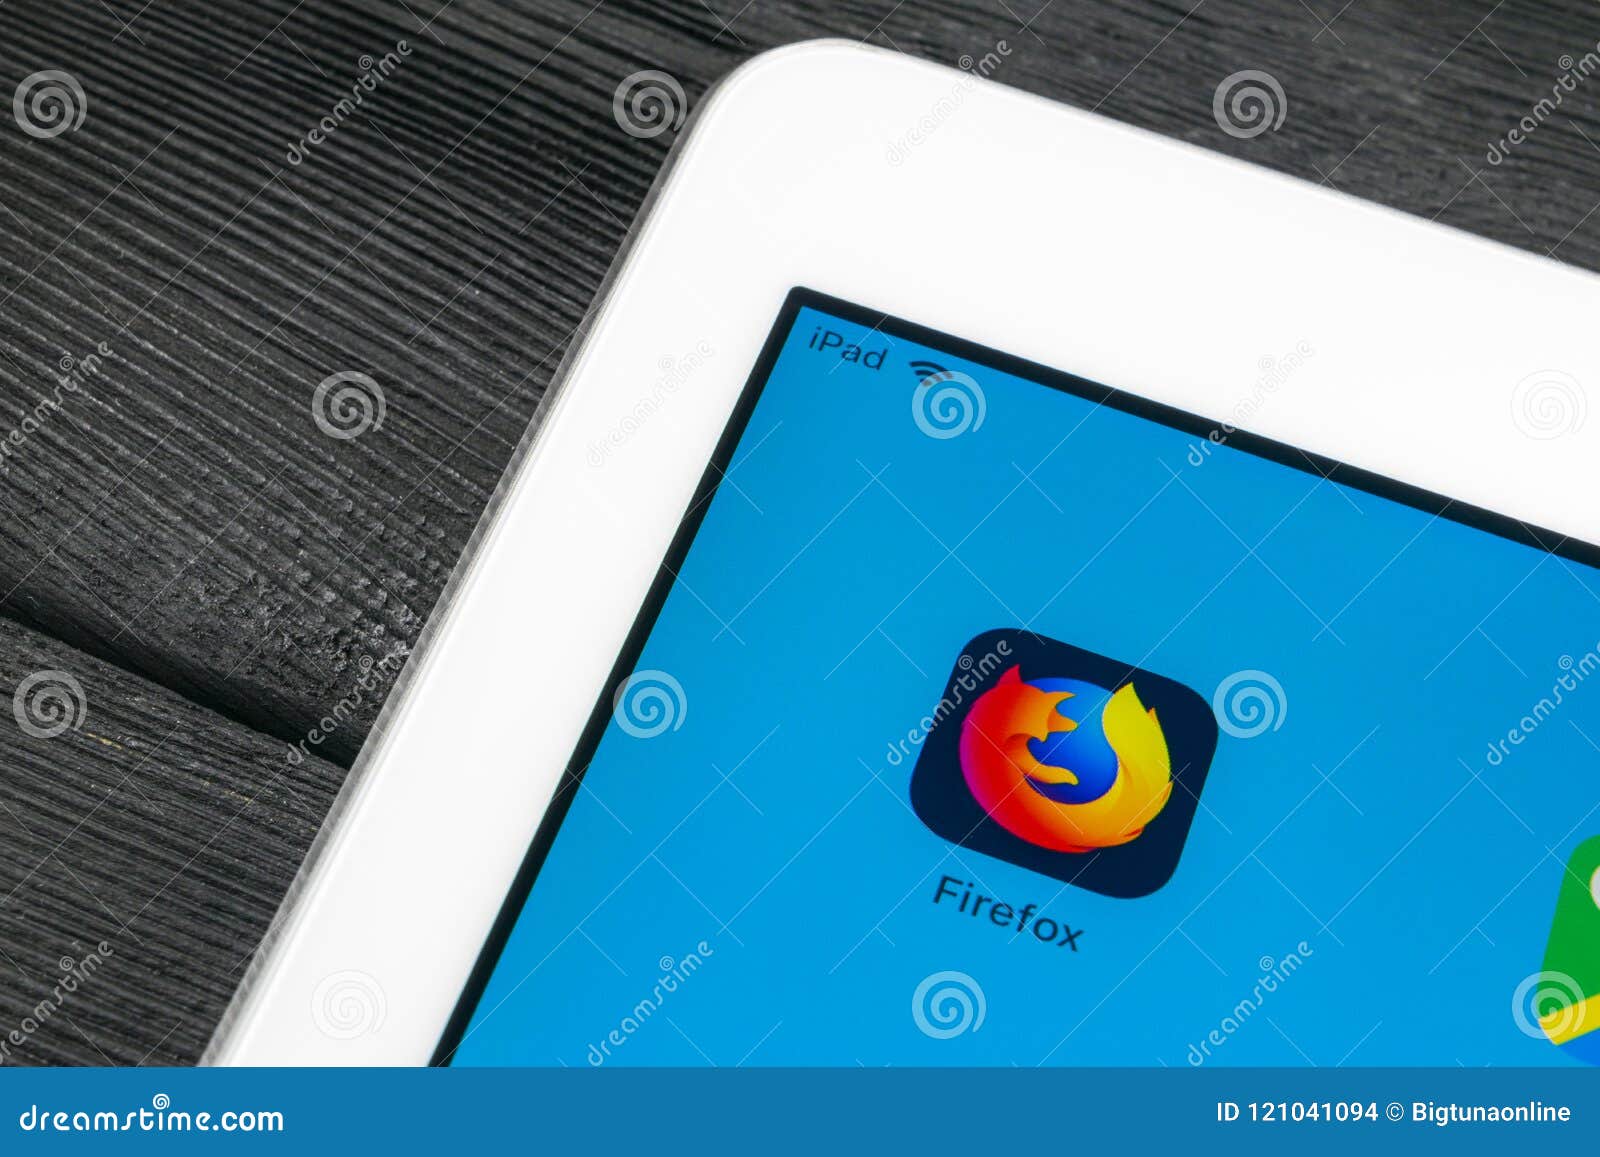 Mozilla Firefox Application Icon on Apple IPad Pro Screen Close-up. Mozilla  Firefox App Icon. Mozilla Firefox Application Editorial Stock Image - Image  of display, company: 121041094